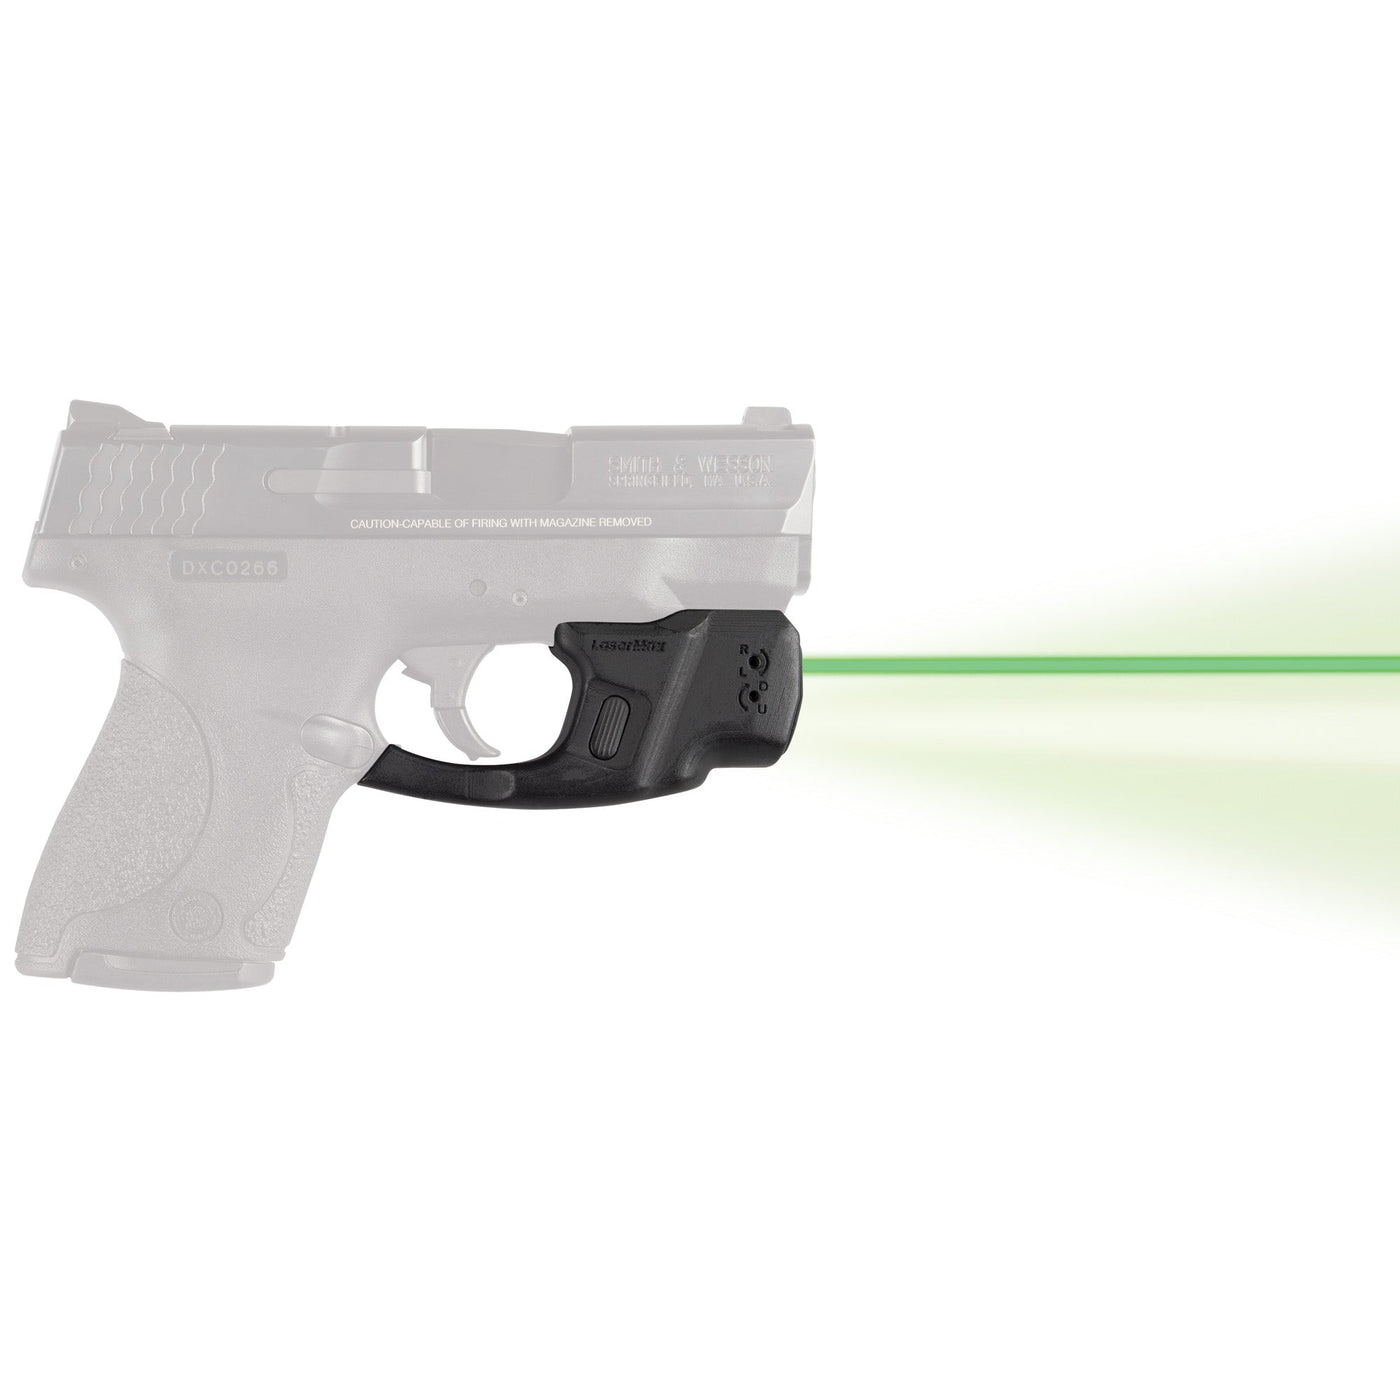 LaserMax LaserMax Centerfire Lght Laser Grn-Grip Sense SW SHIELD 9MM Optics And Sights